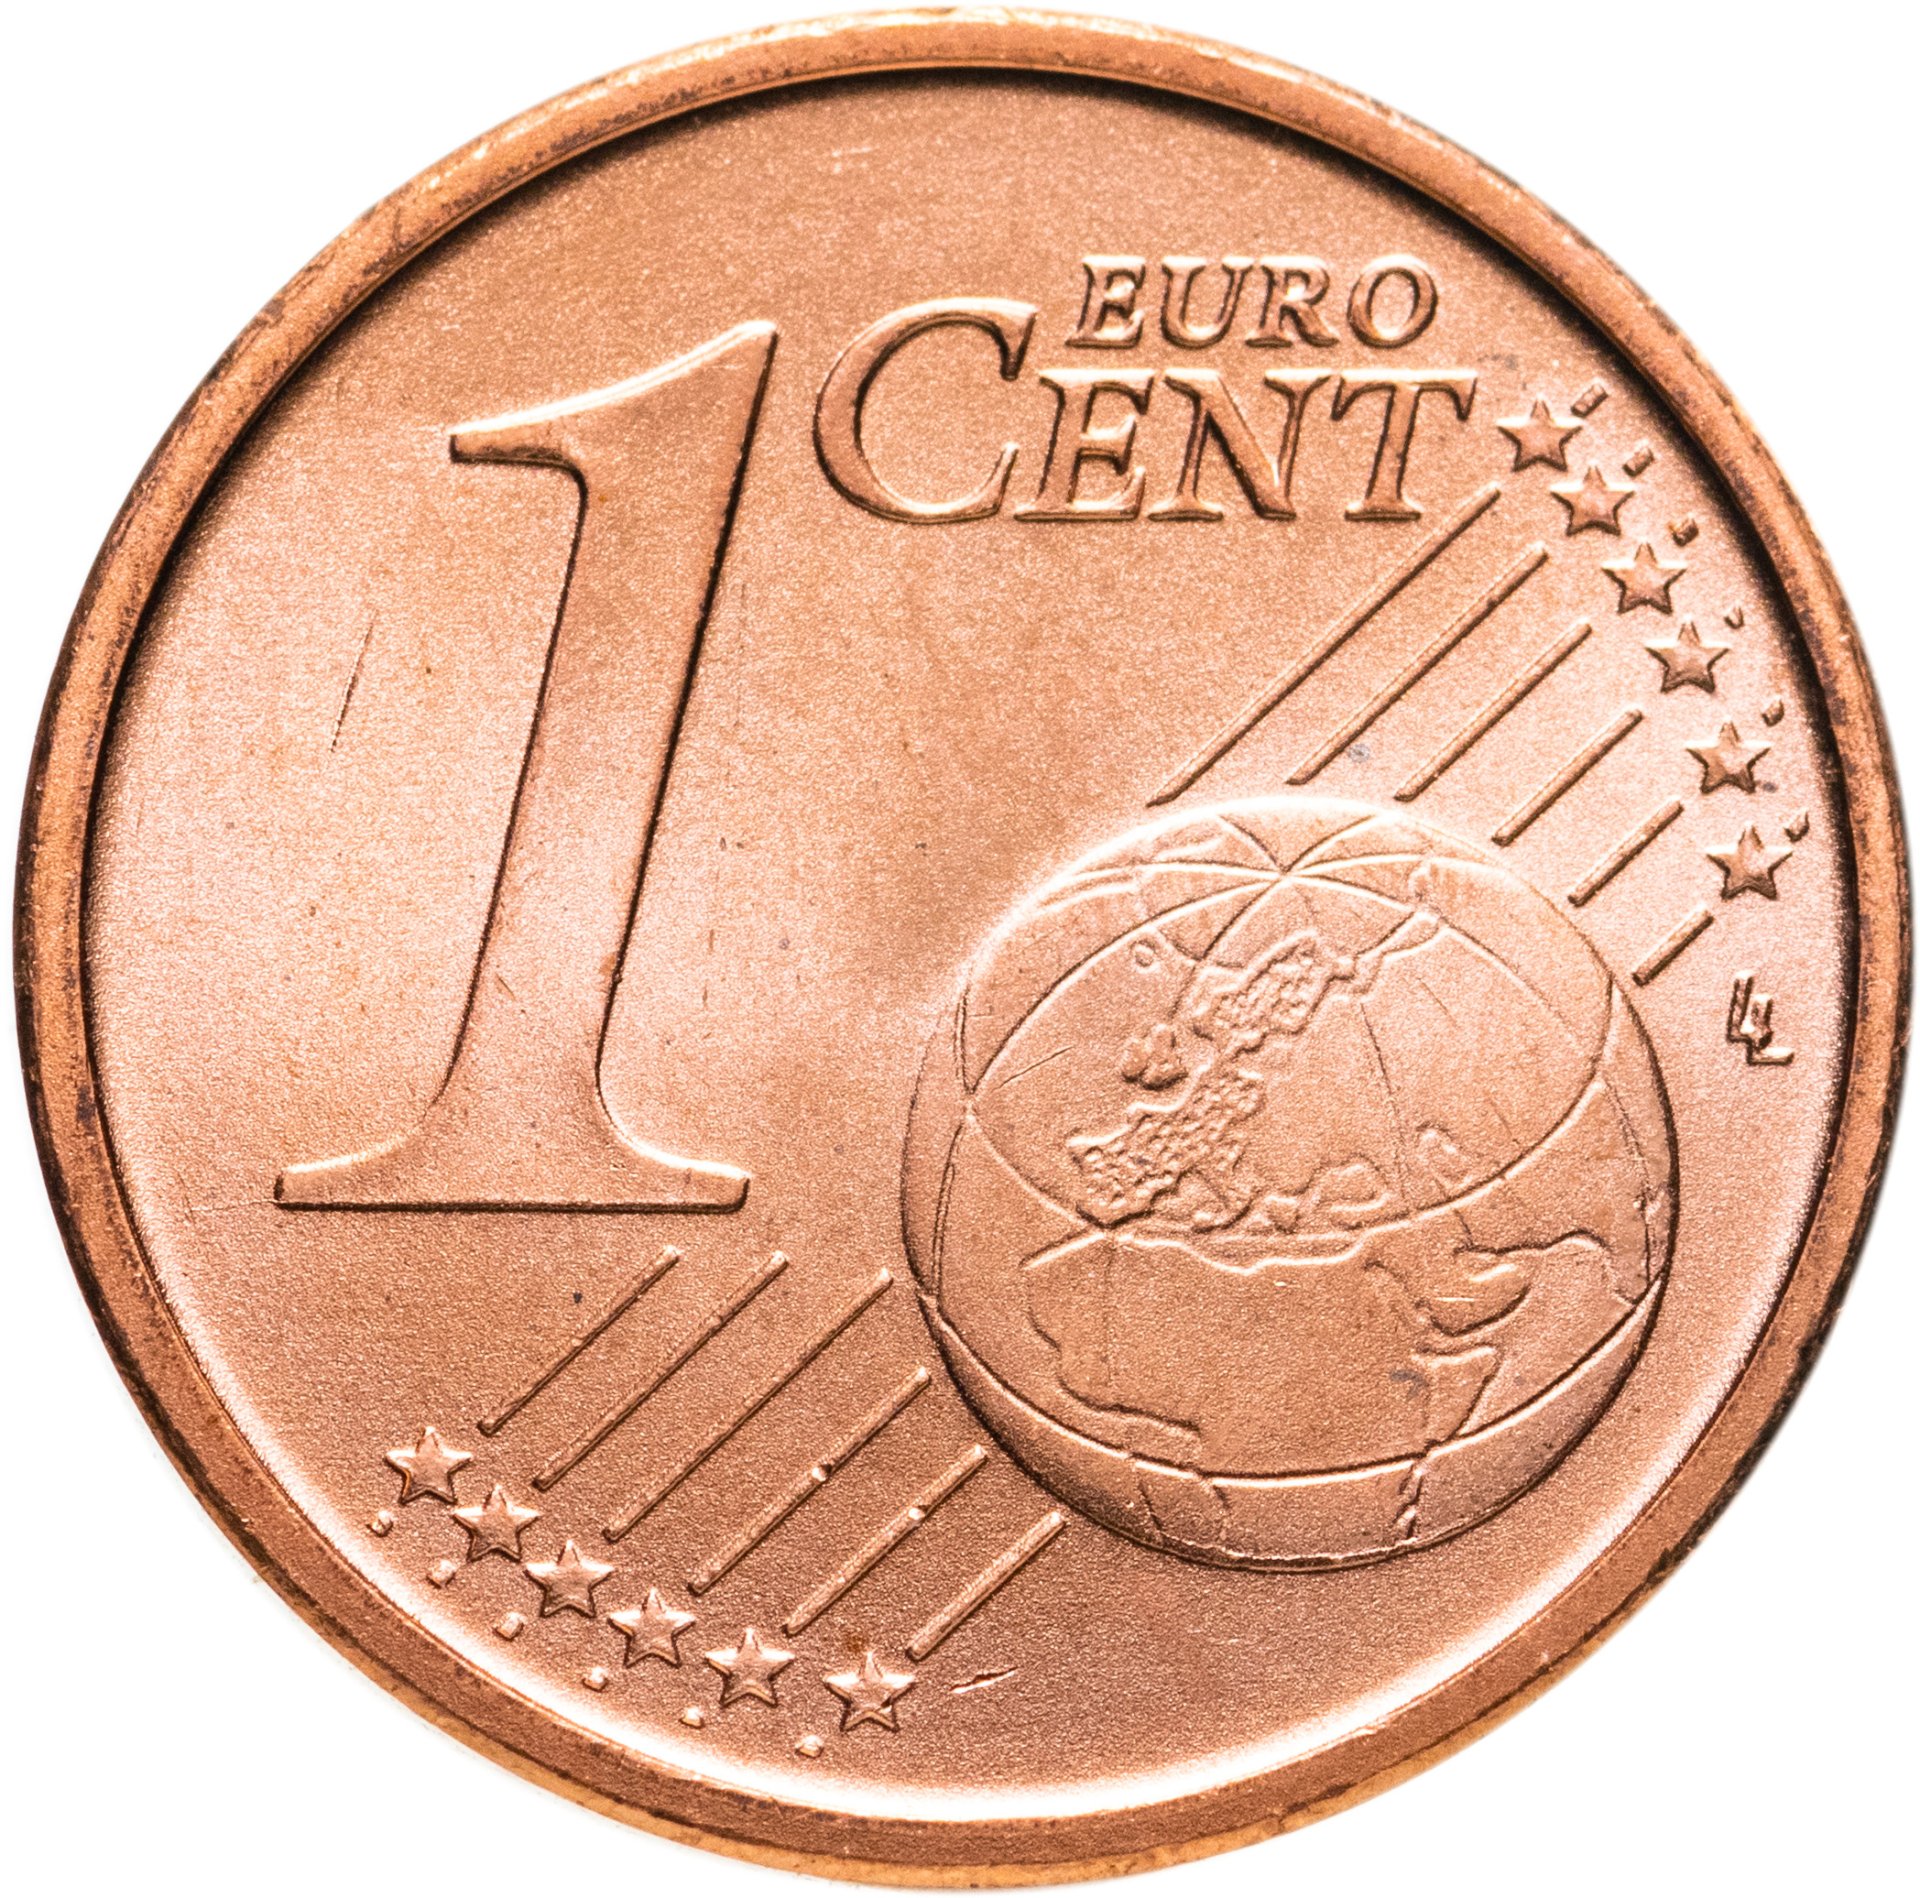 First coins. Монета евро цент. Евроценты монеты Франции. Монета 1 евроцент. Евро Монетка 1 цент.